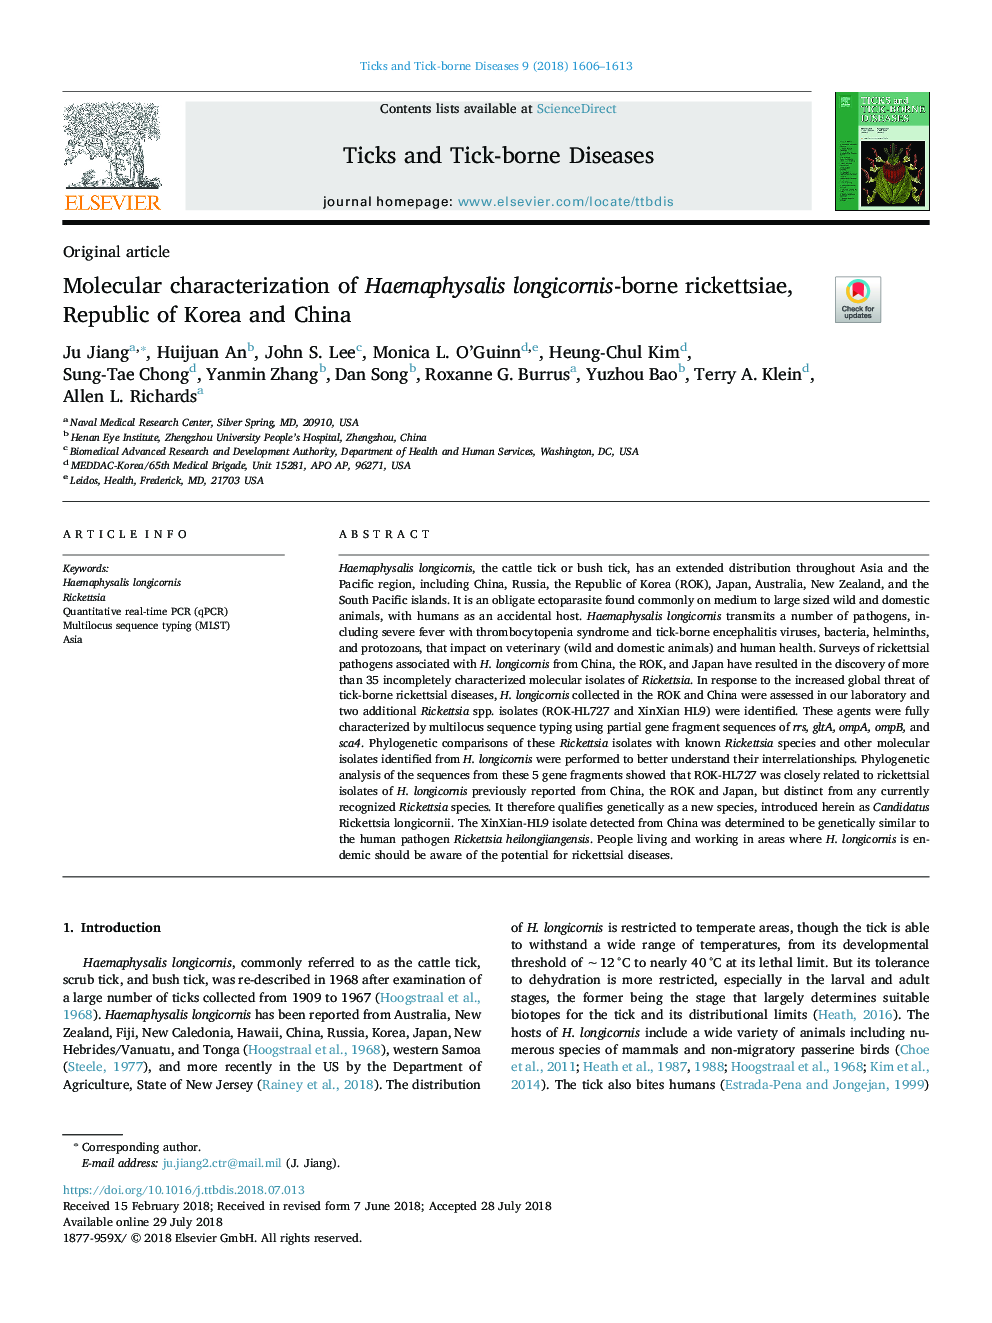 Molecular characterization of Haemaphysalis longicornis-borne rickettsiae, Republic of Korea and China